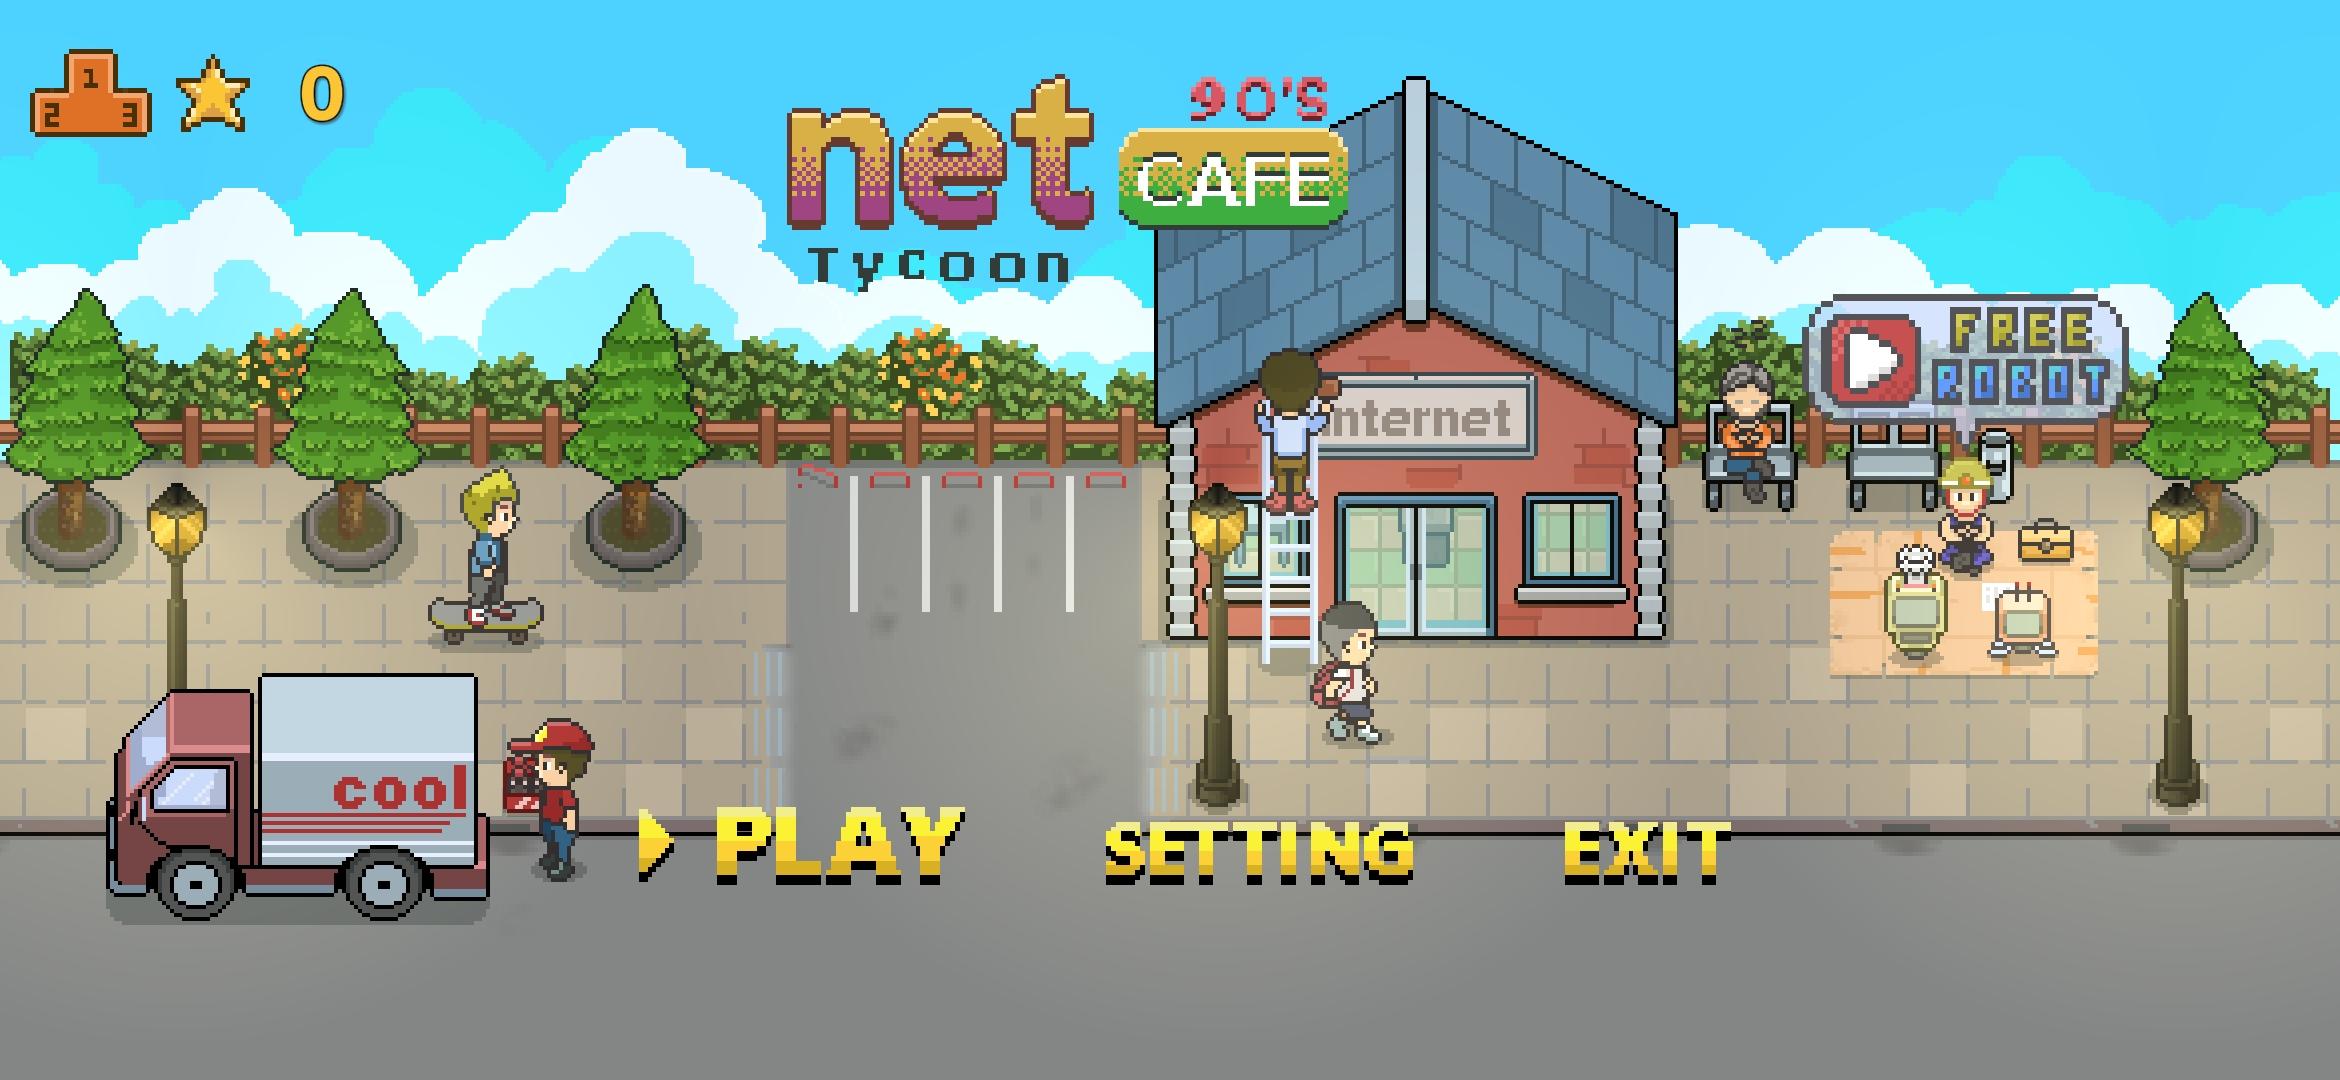 Screenshot 1 of Magnate di NetCafe 1.0.5.9